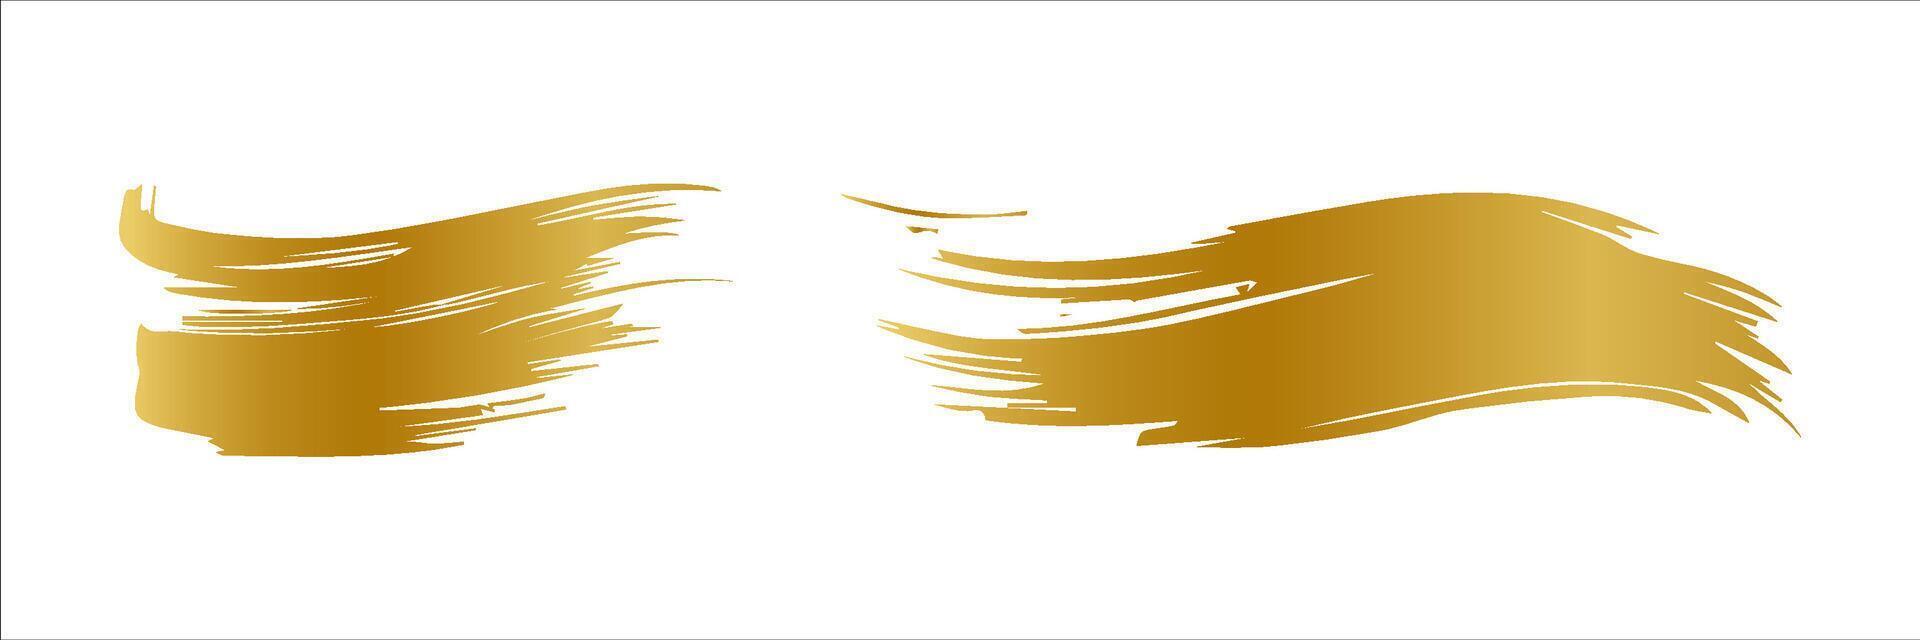 Vektor Gold Farbe Abstrich Schlaganfall Fleck. abstrakt Gold glänzend texturiert Kunst Illustration. abstrakt Gold glänzend texturiert Kunst Illustration.